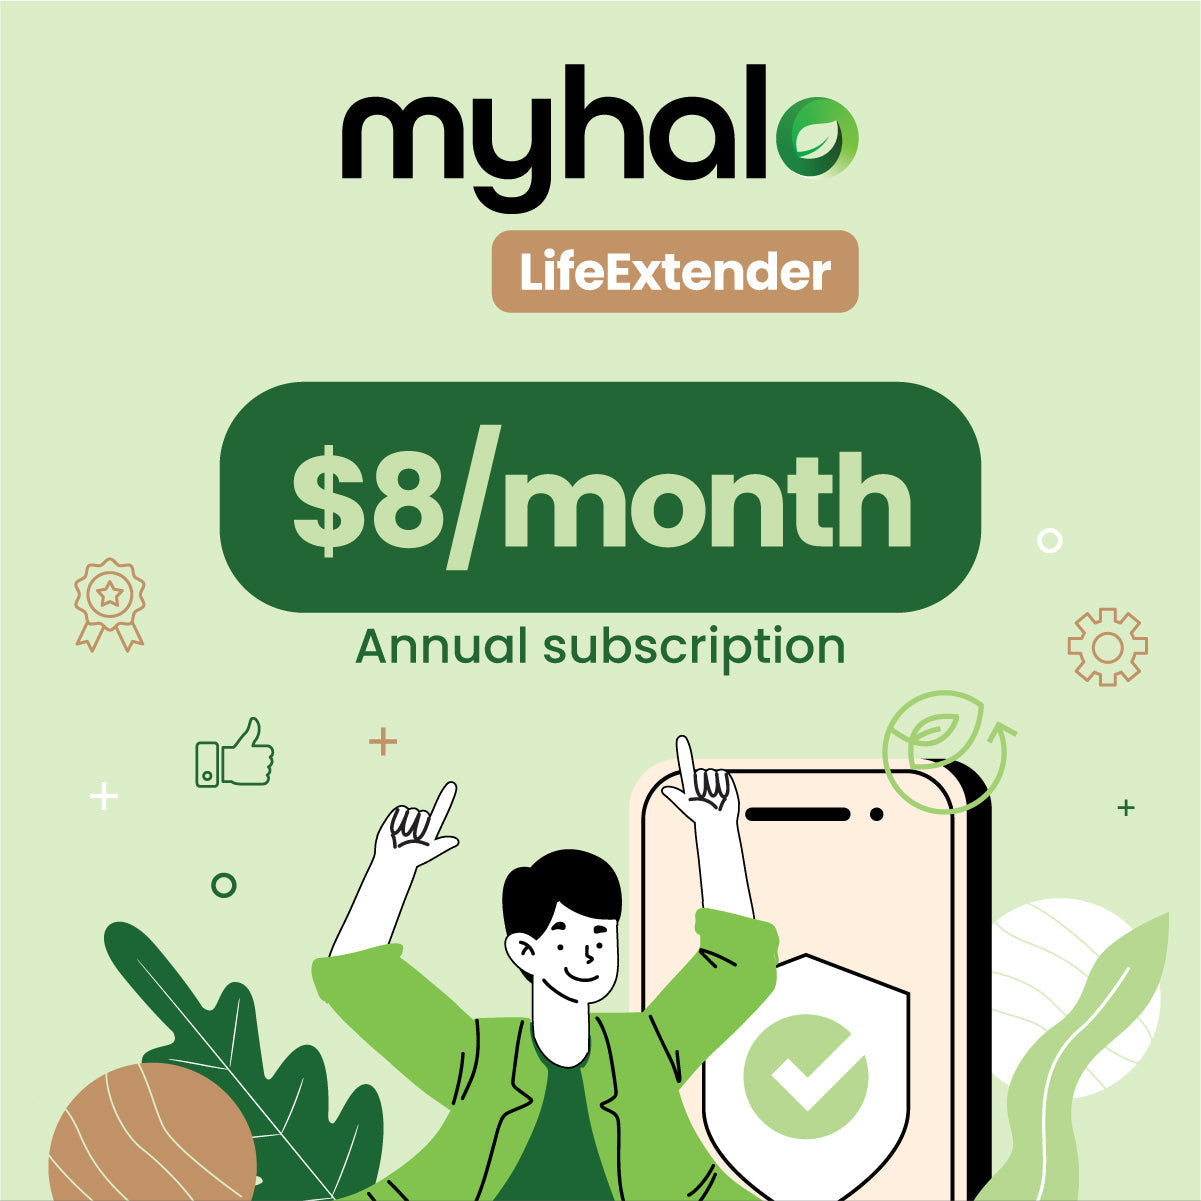 myhalo LifeExtender (LE) Subscription